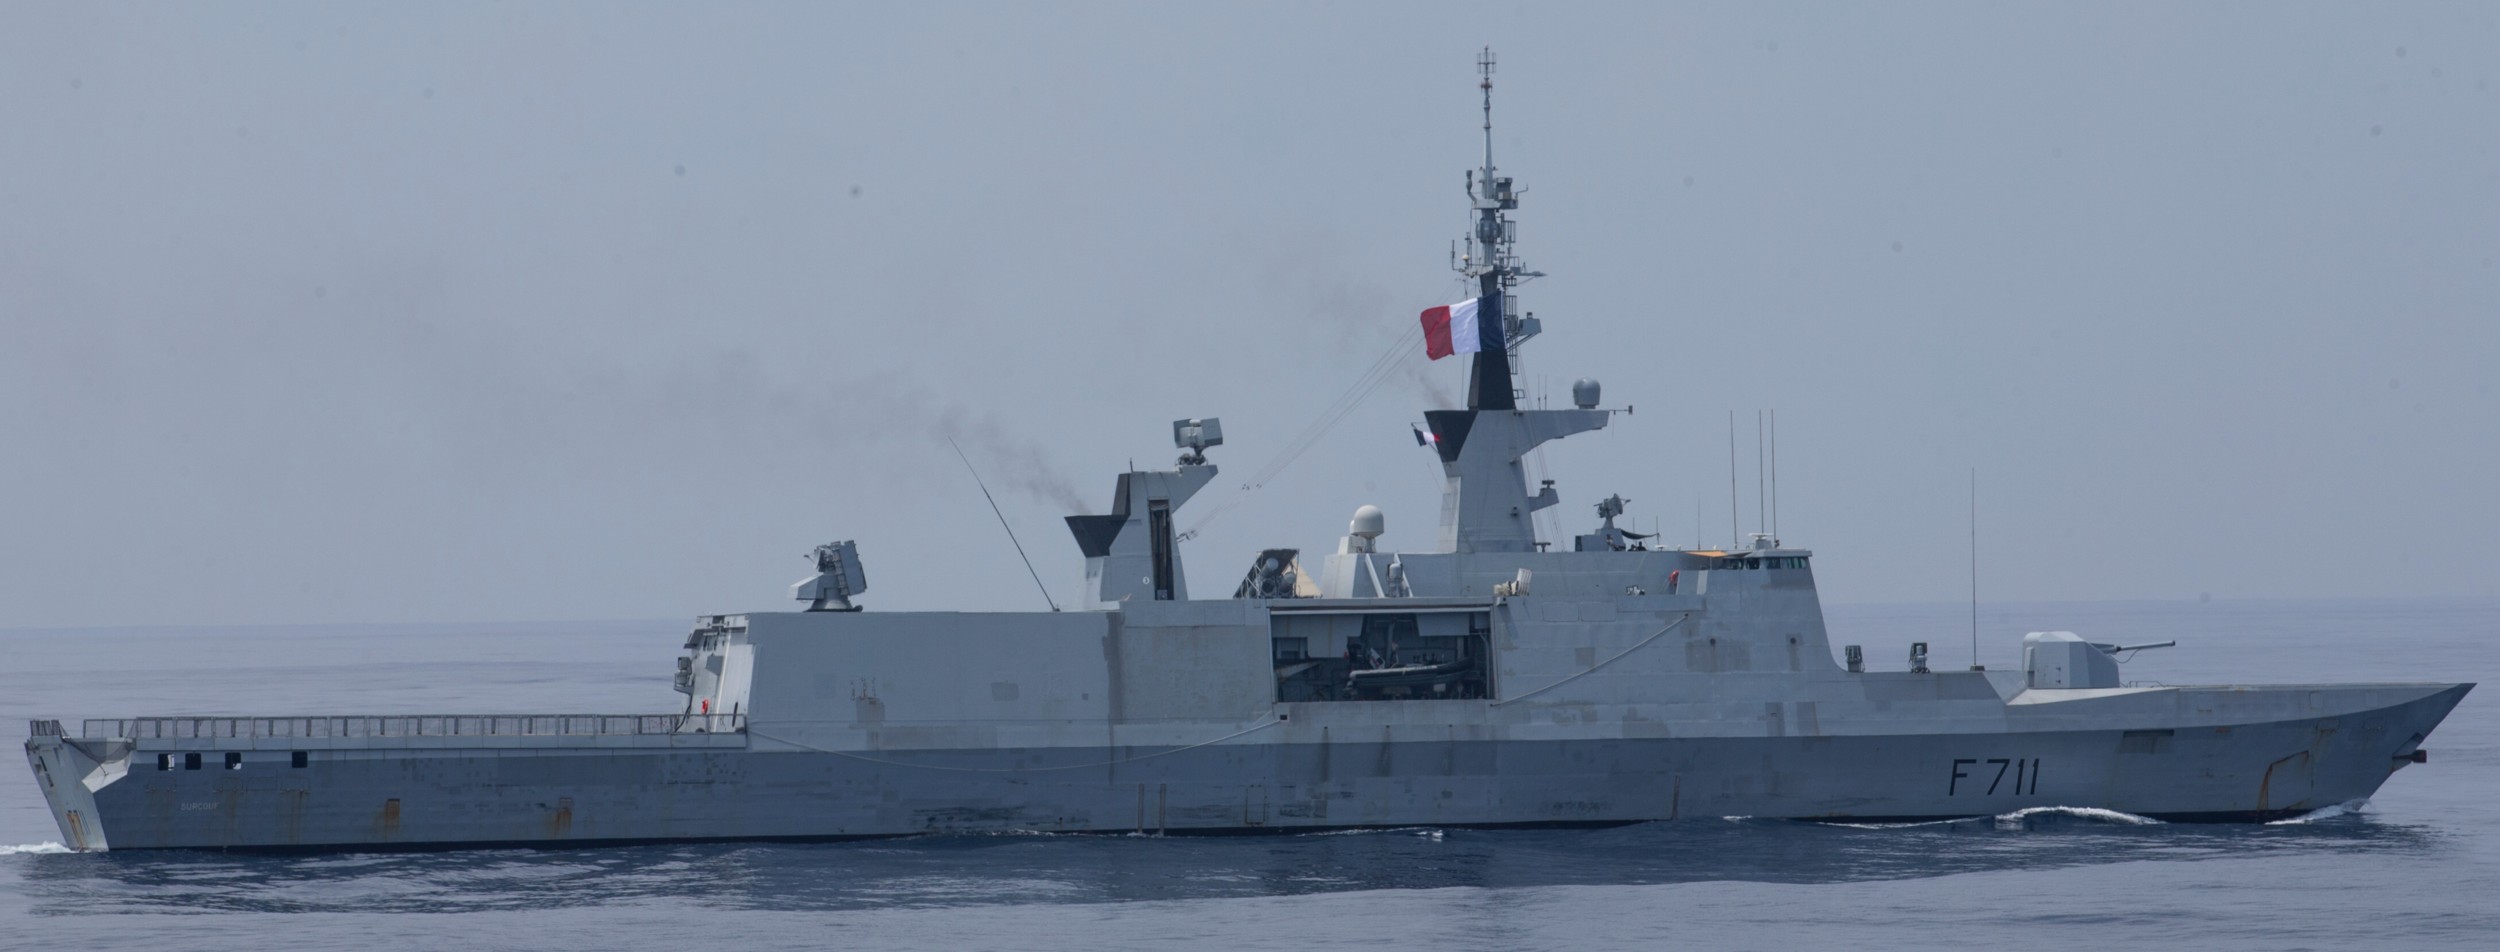 f-711 fs surcouf la fayette class frigate french navy marine nationale 28